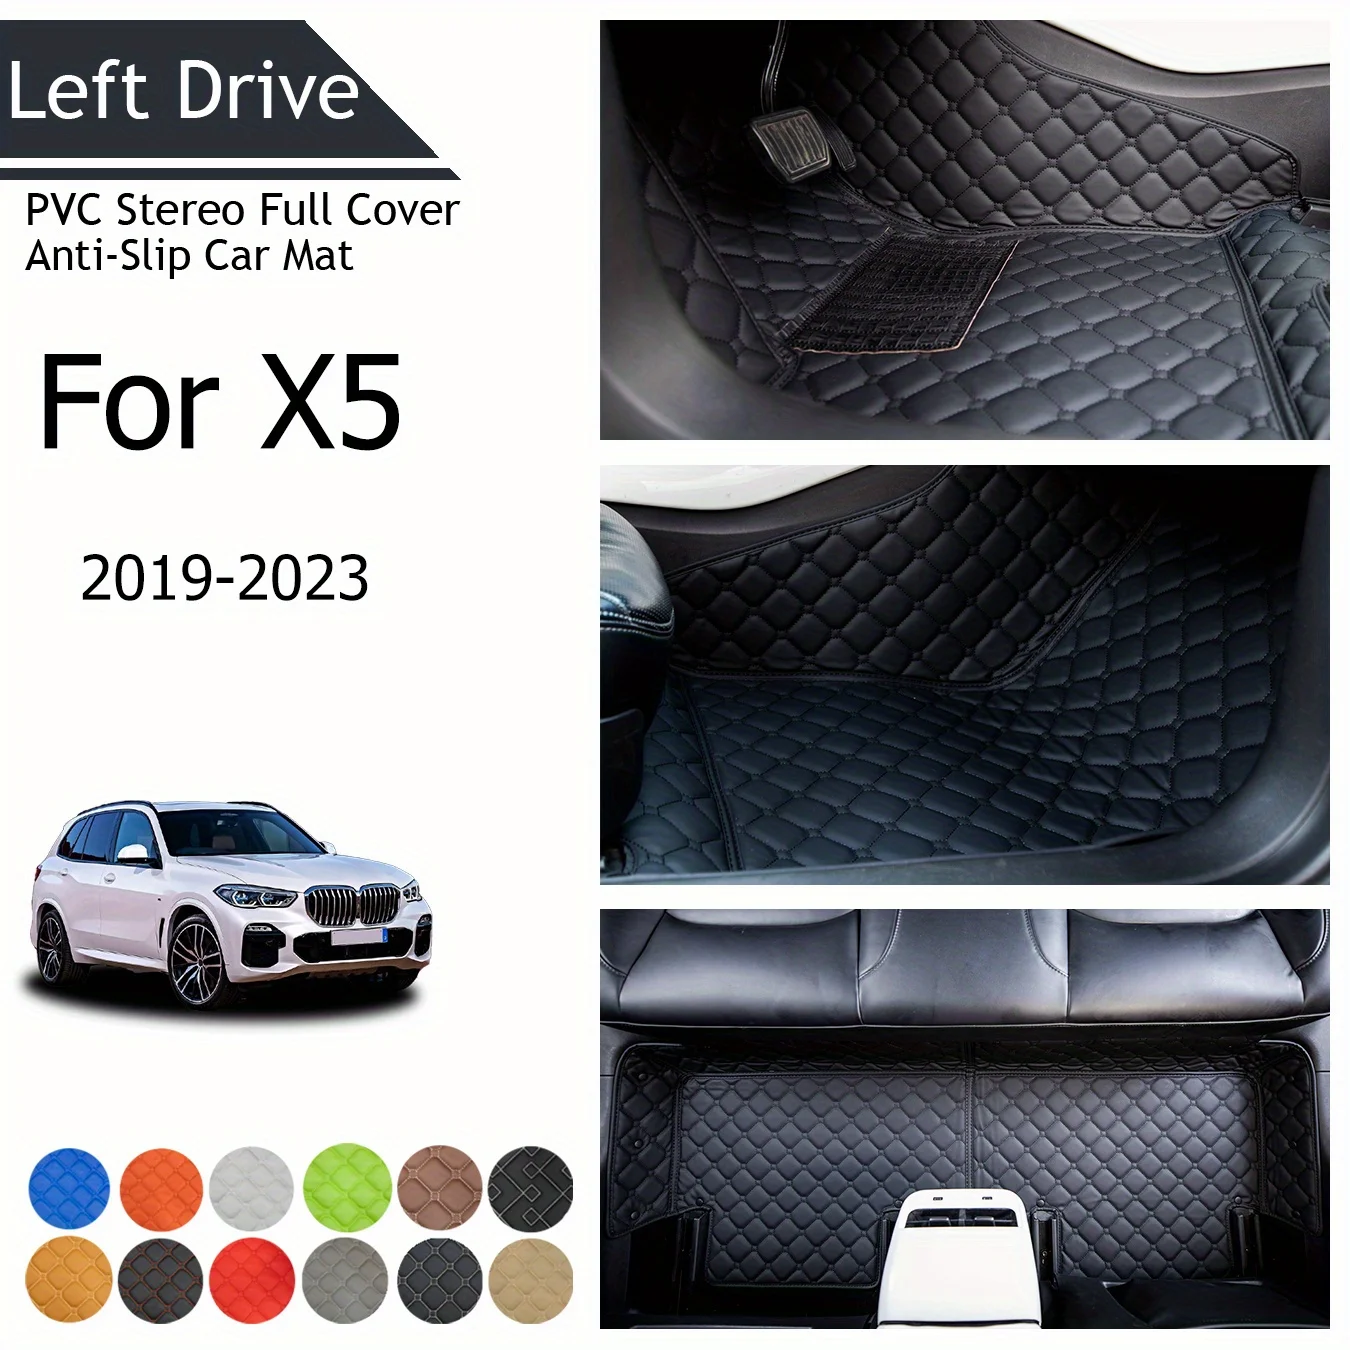 

TEGART 【LHD】For BMW For X5 2019-2023 Three Layer PVC Stereo Full Cover Anti-Slip Car Mat Car Floor Mats Car Accessories